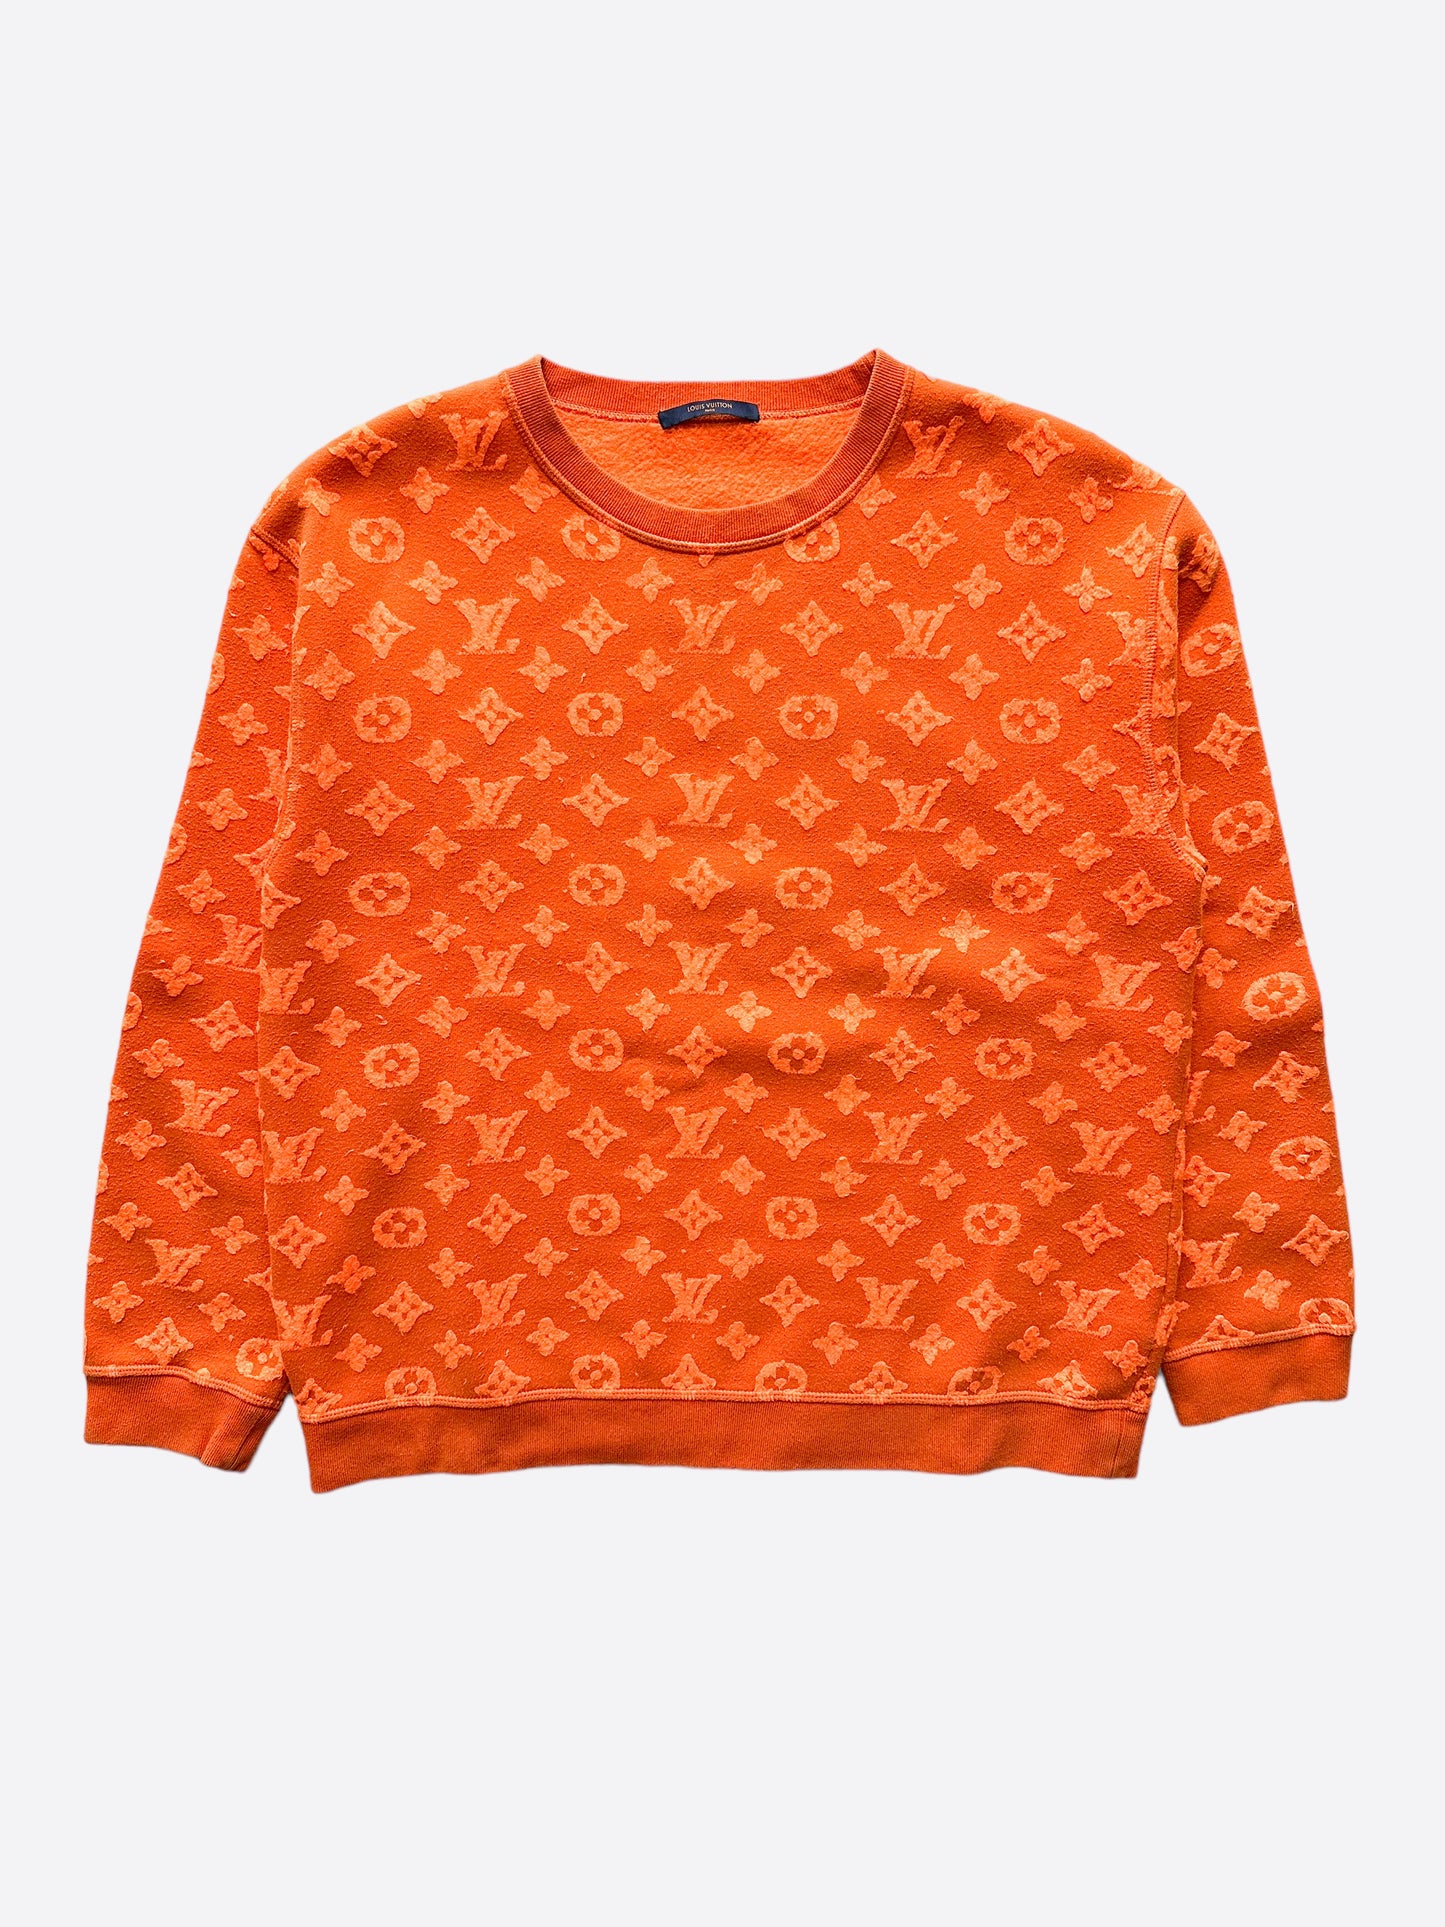 Louis Vuitton Colorful Monogram Sweater Pattern